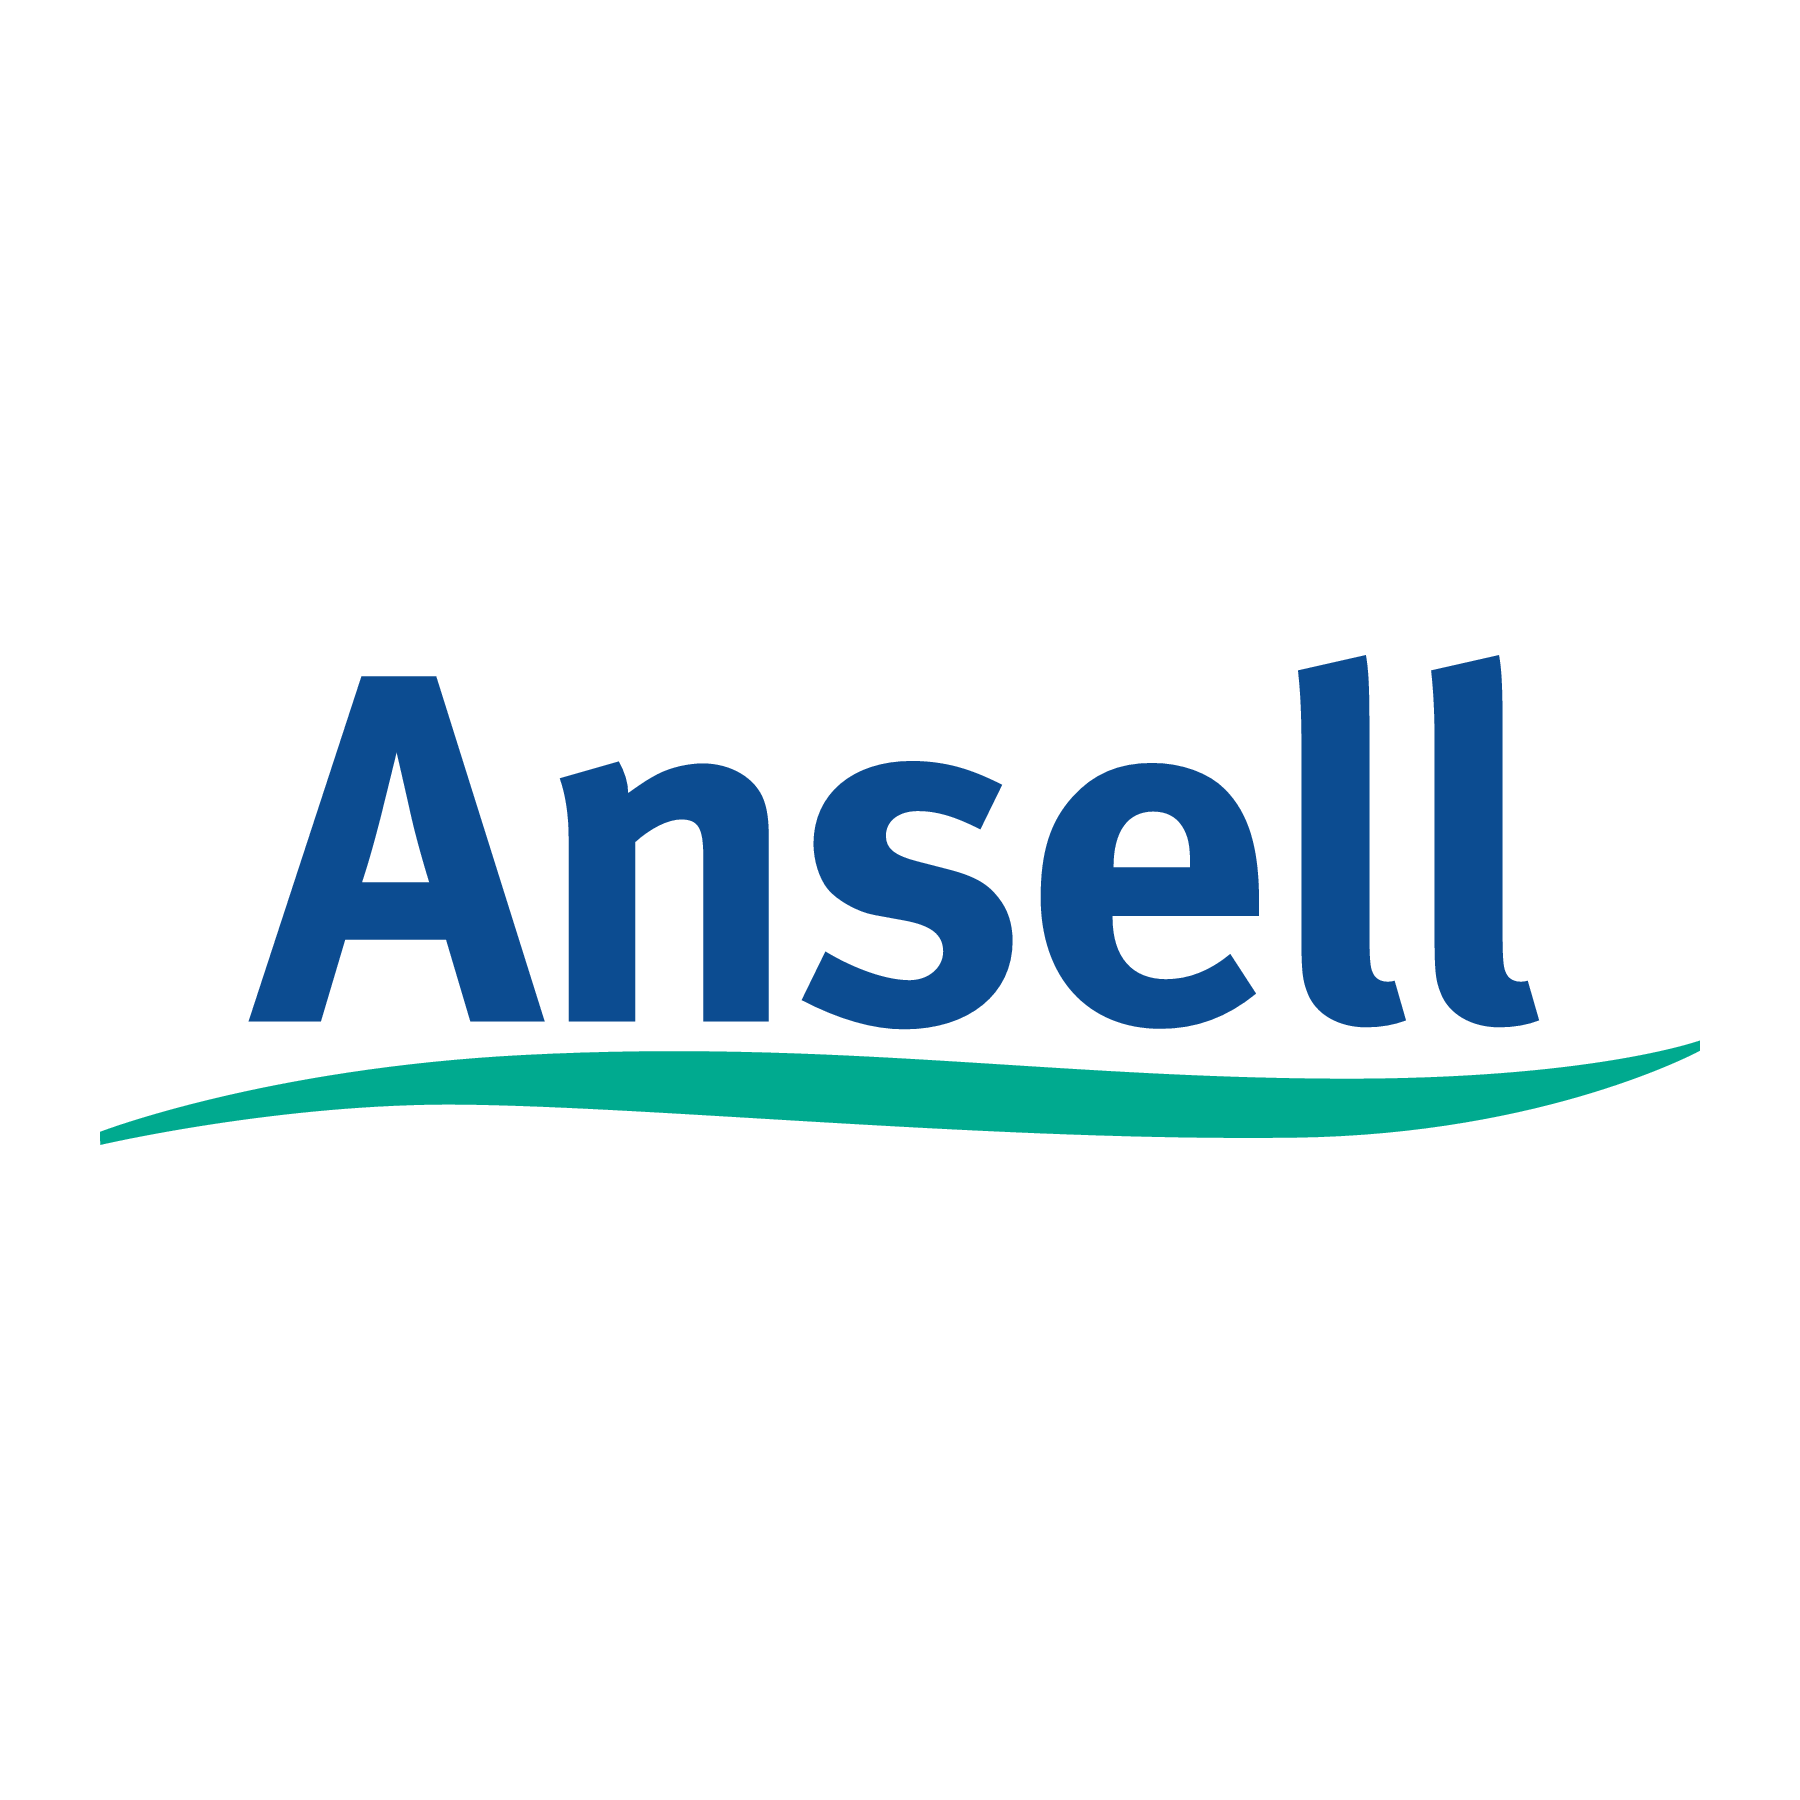 Ansell corporate logo